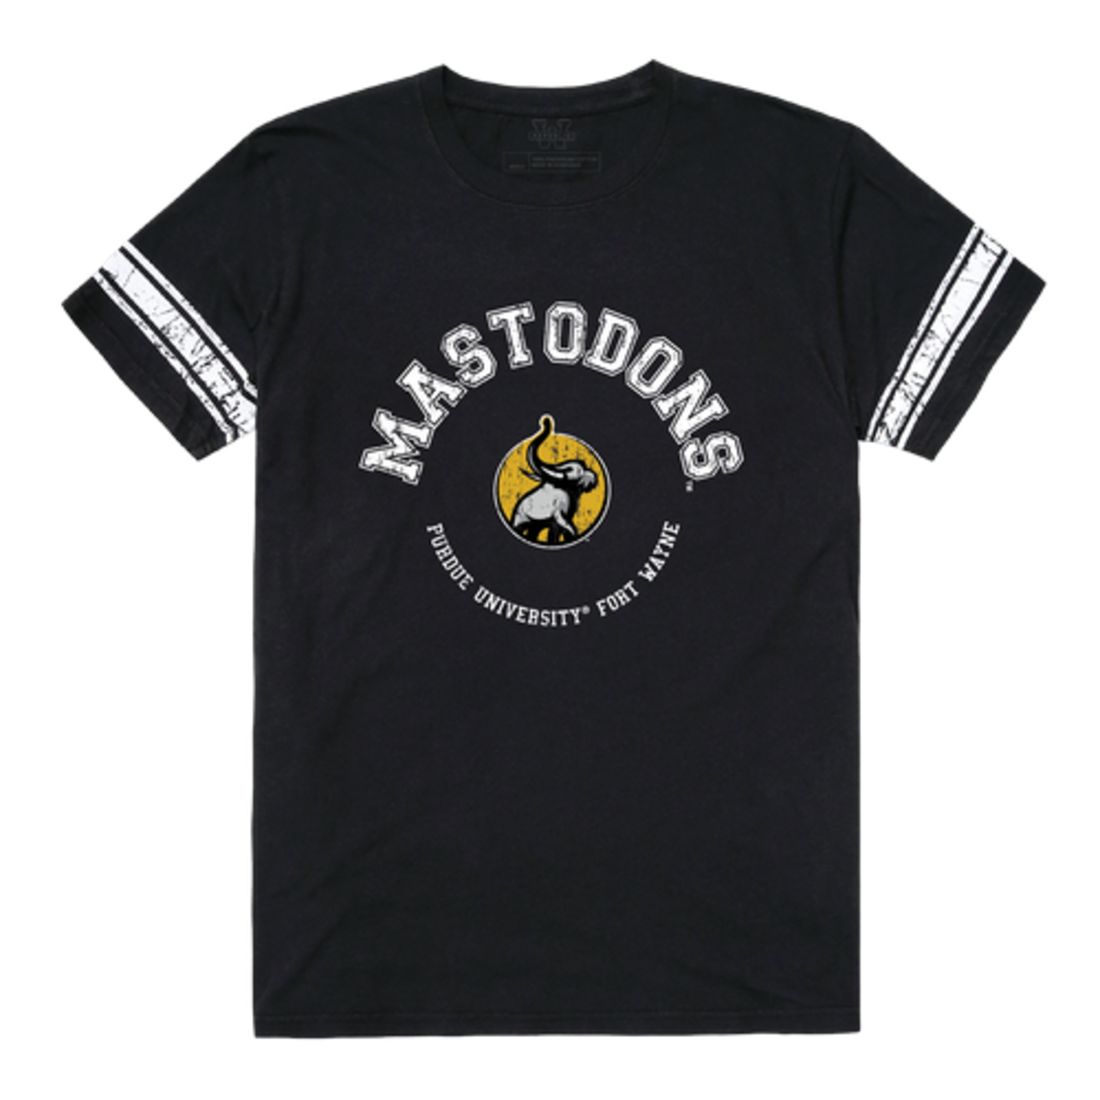 Purdue University Fort Wayne Mastodons Football T-Shirt Tee